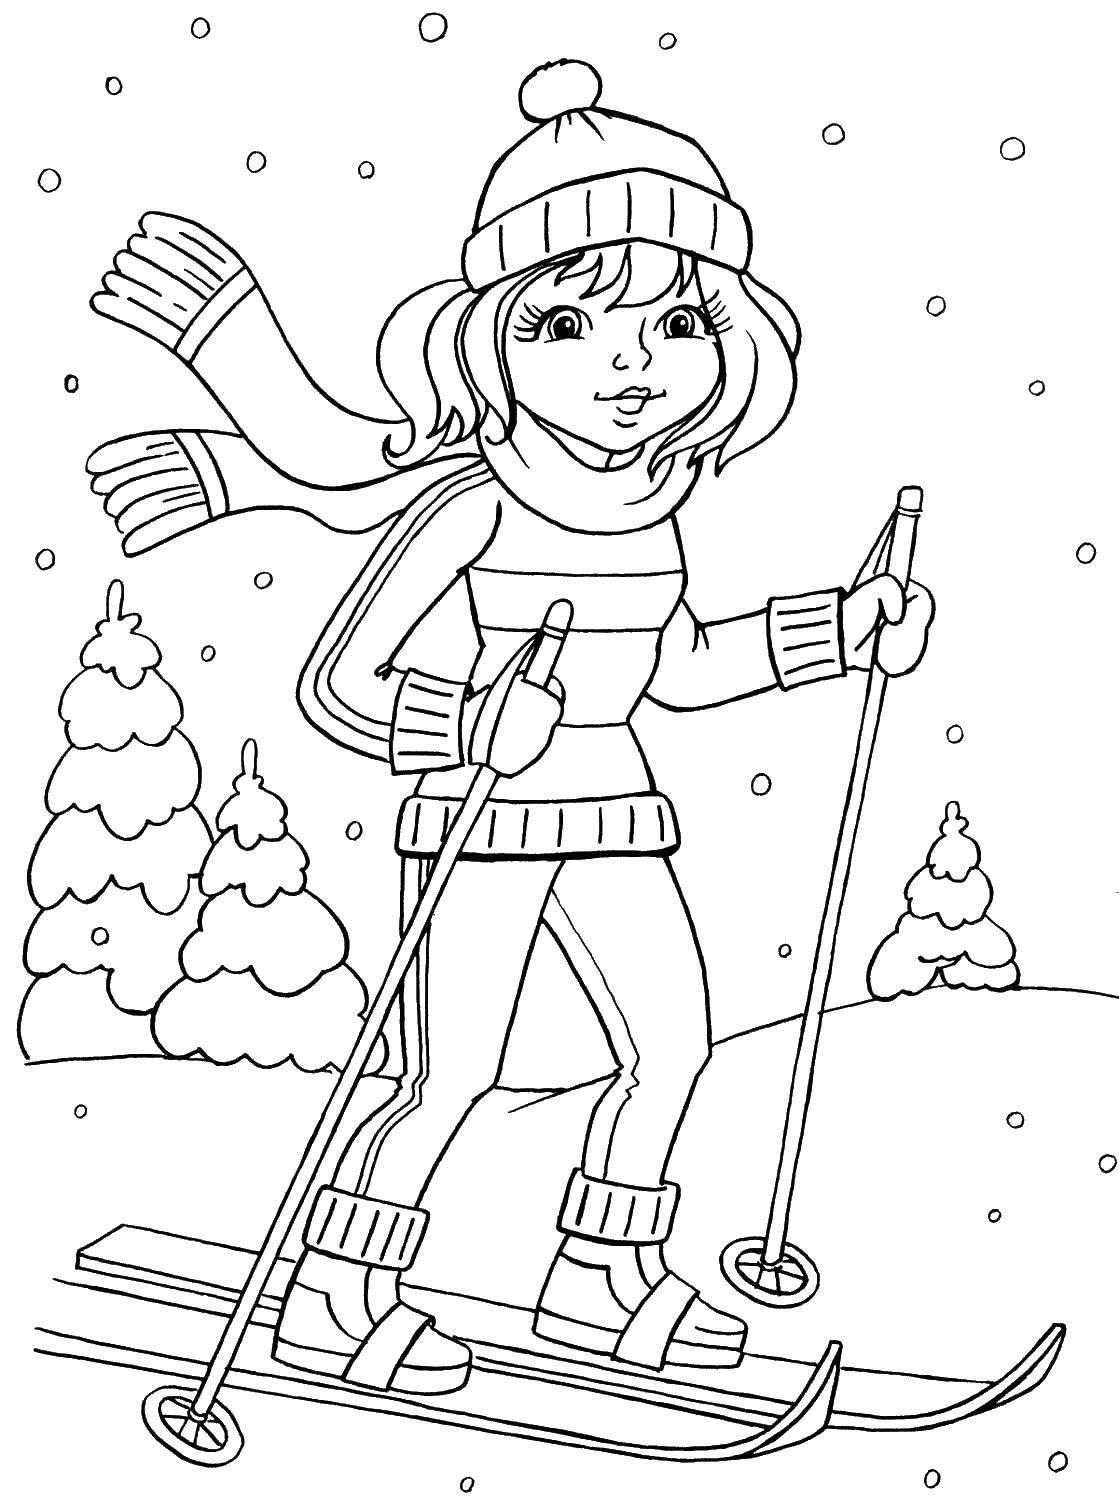 Coloring Girl skiing. Category skiing. Tags:  skiing, girl, sports.